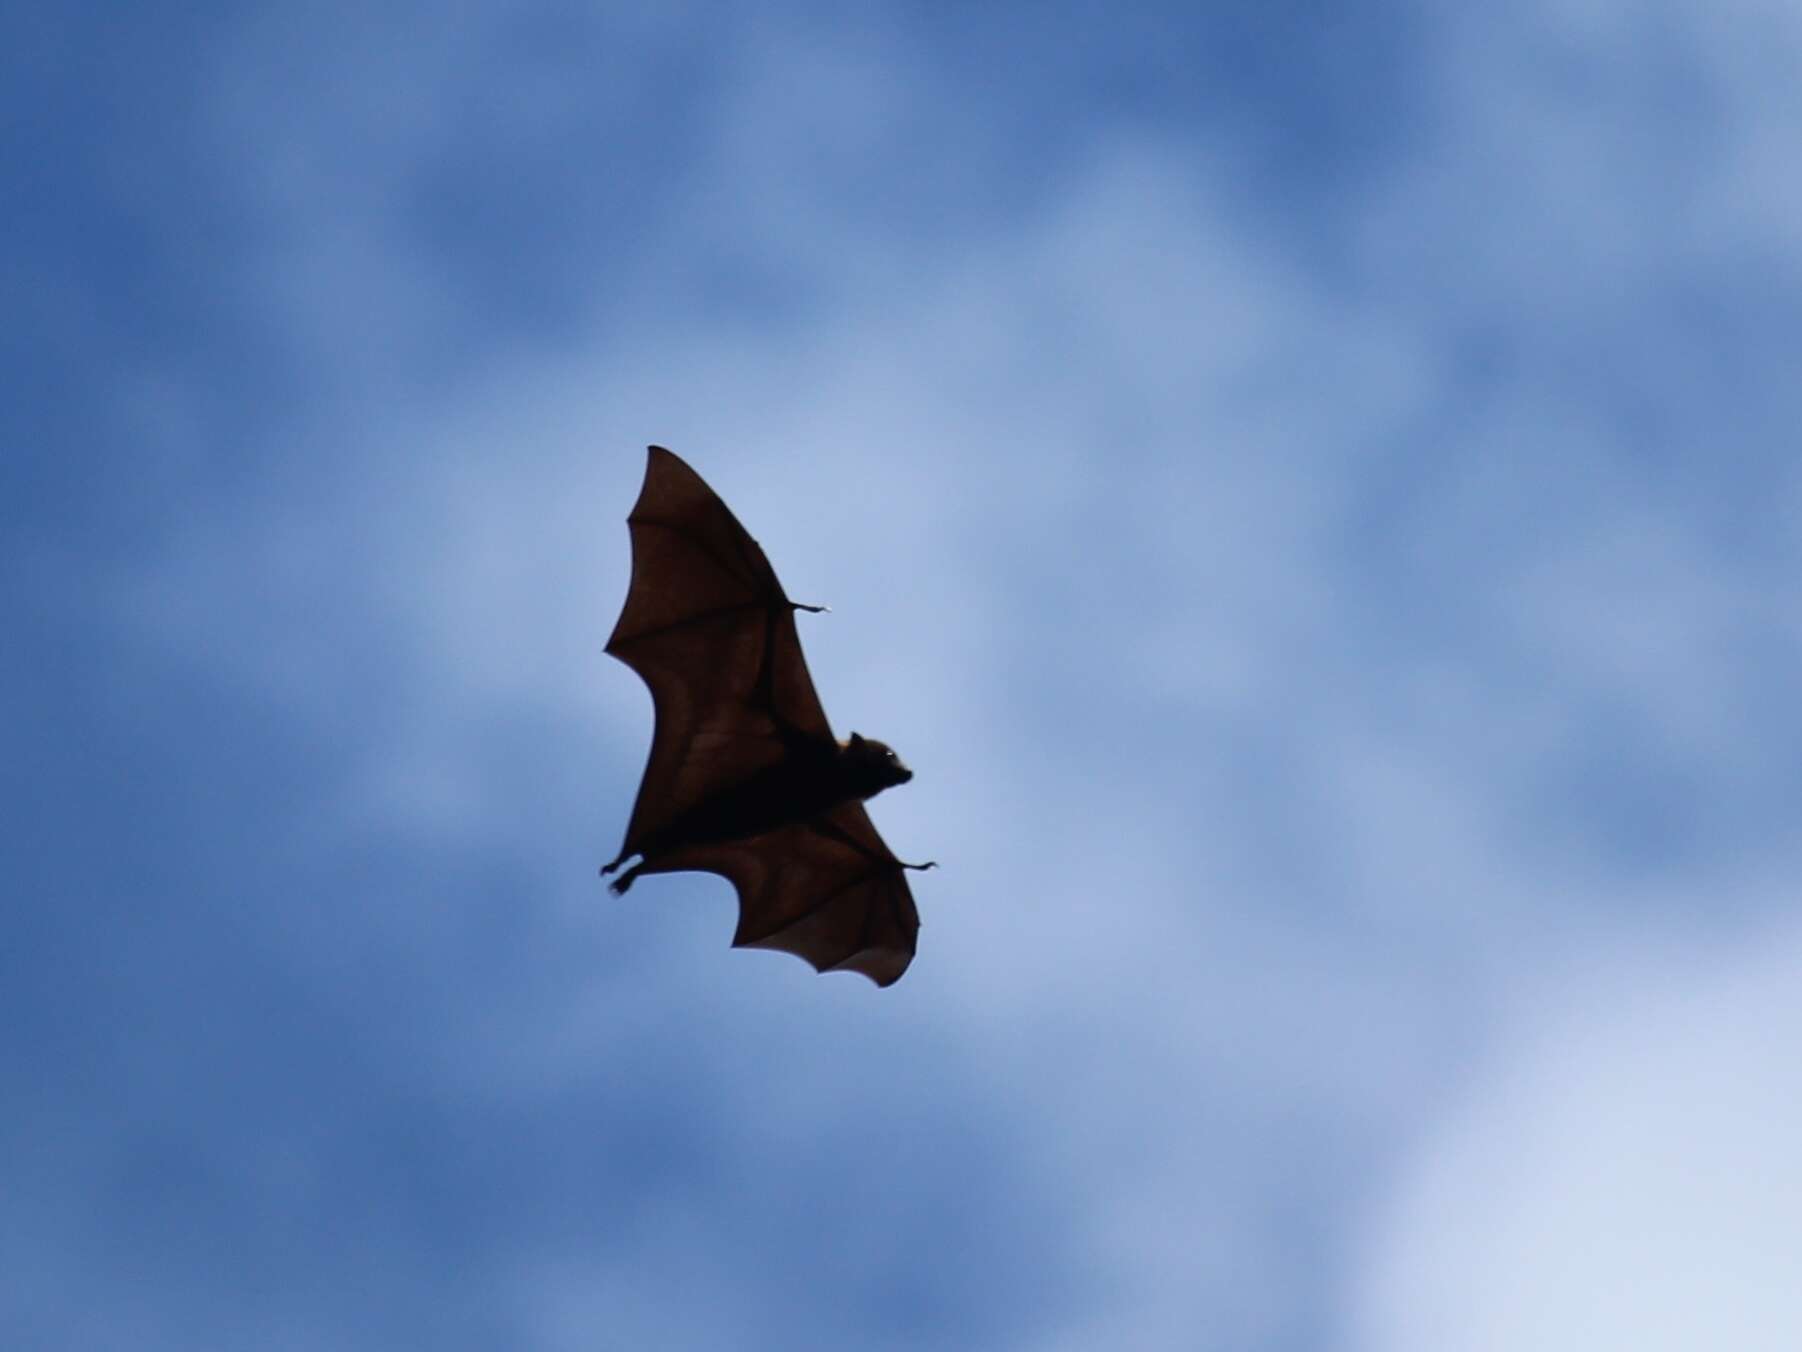 Image of Kosrae Flying Fox